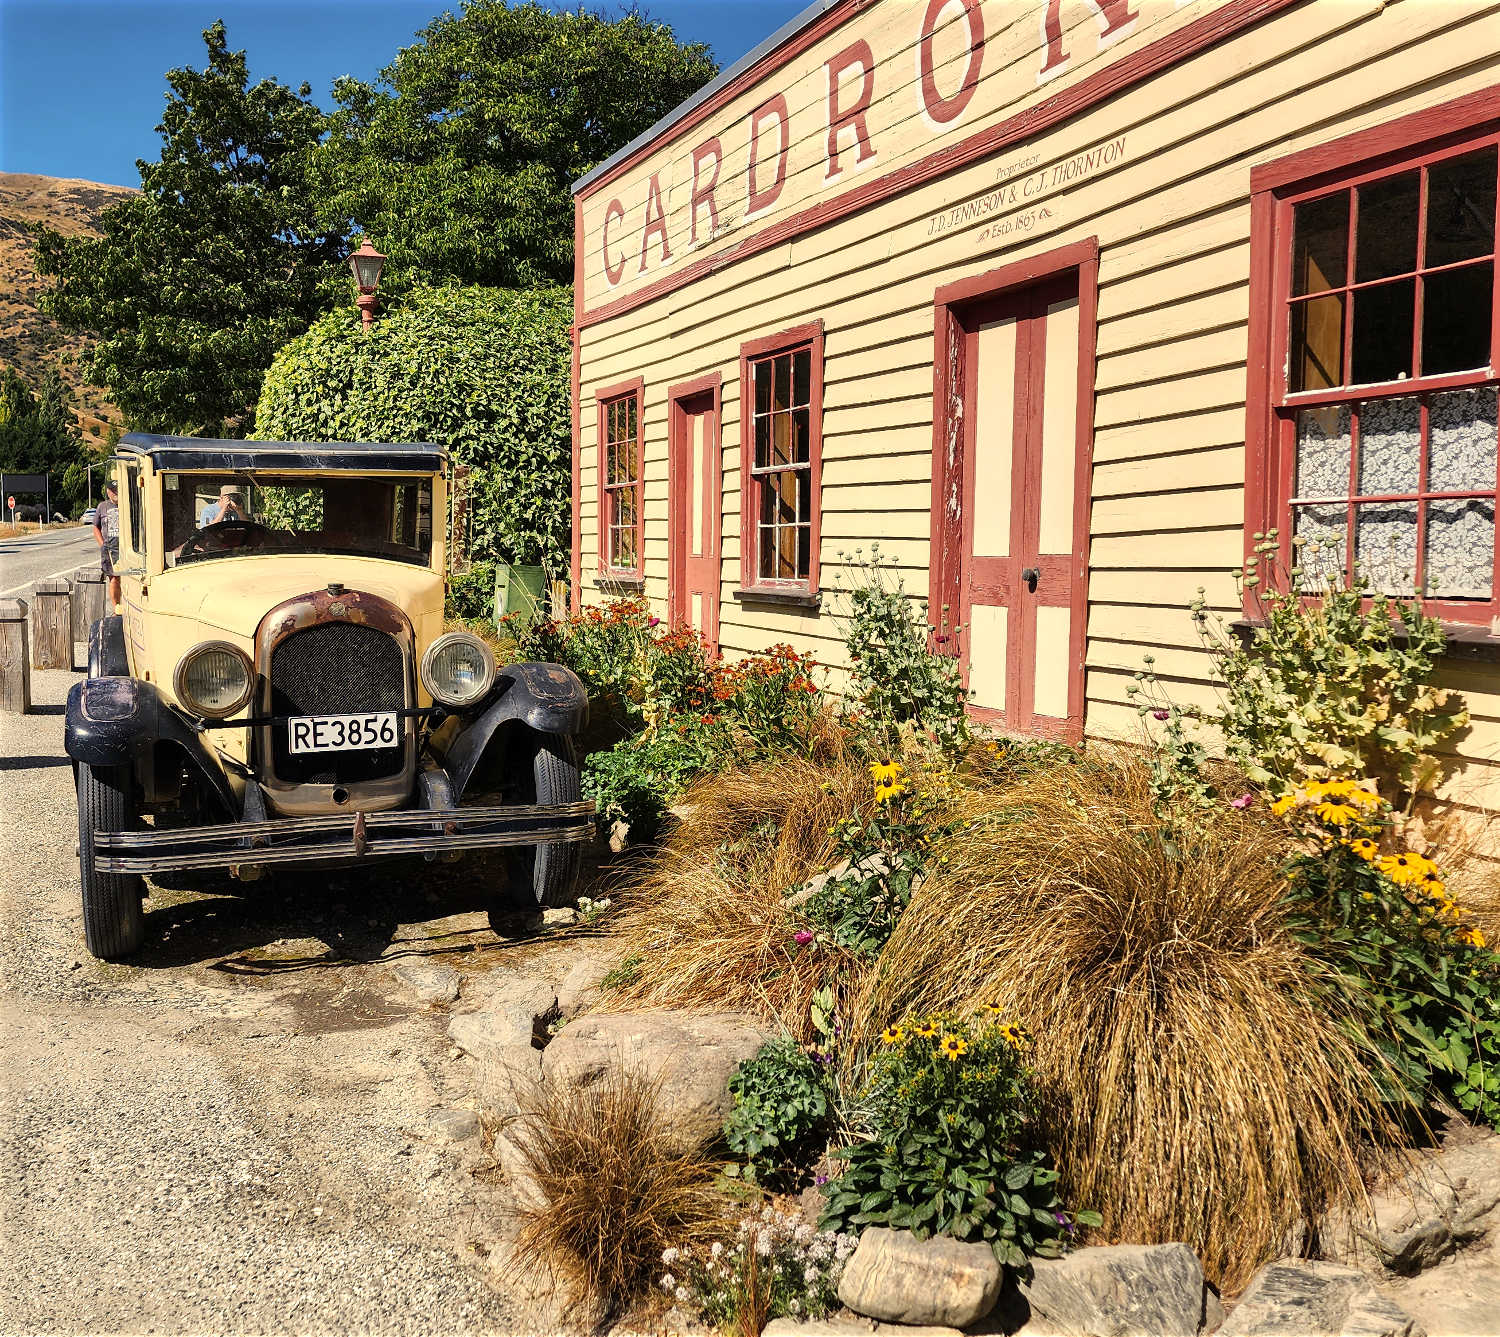 Crown Range highway selfie location, Cardrona historic hotel vintage vehicle, South Island, New Zealand